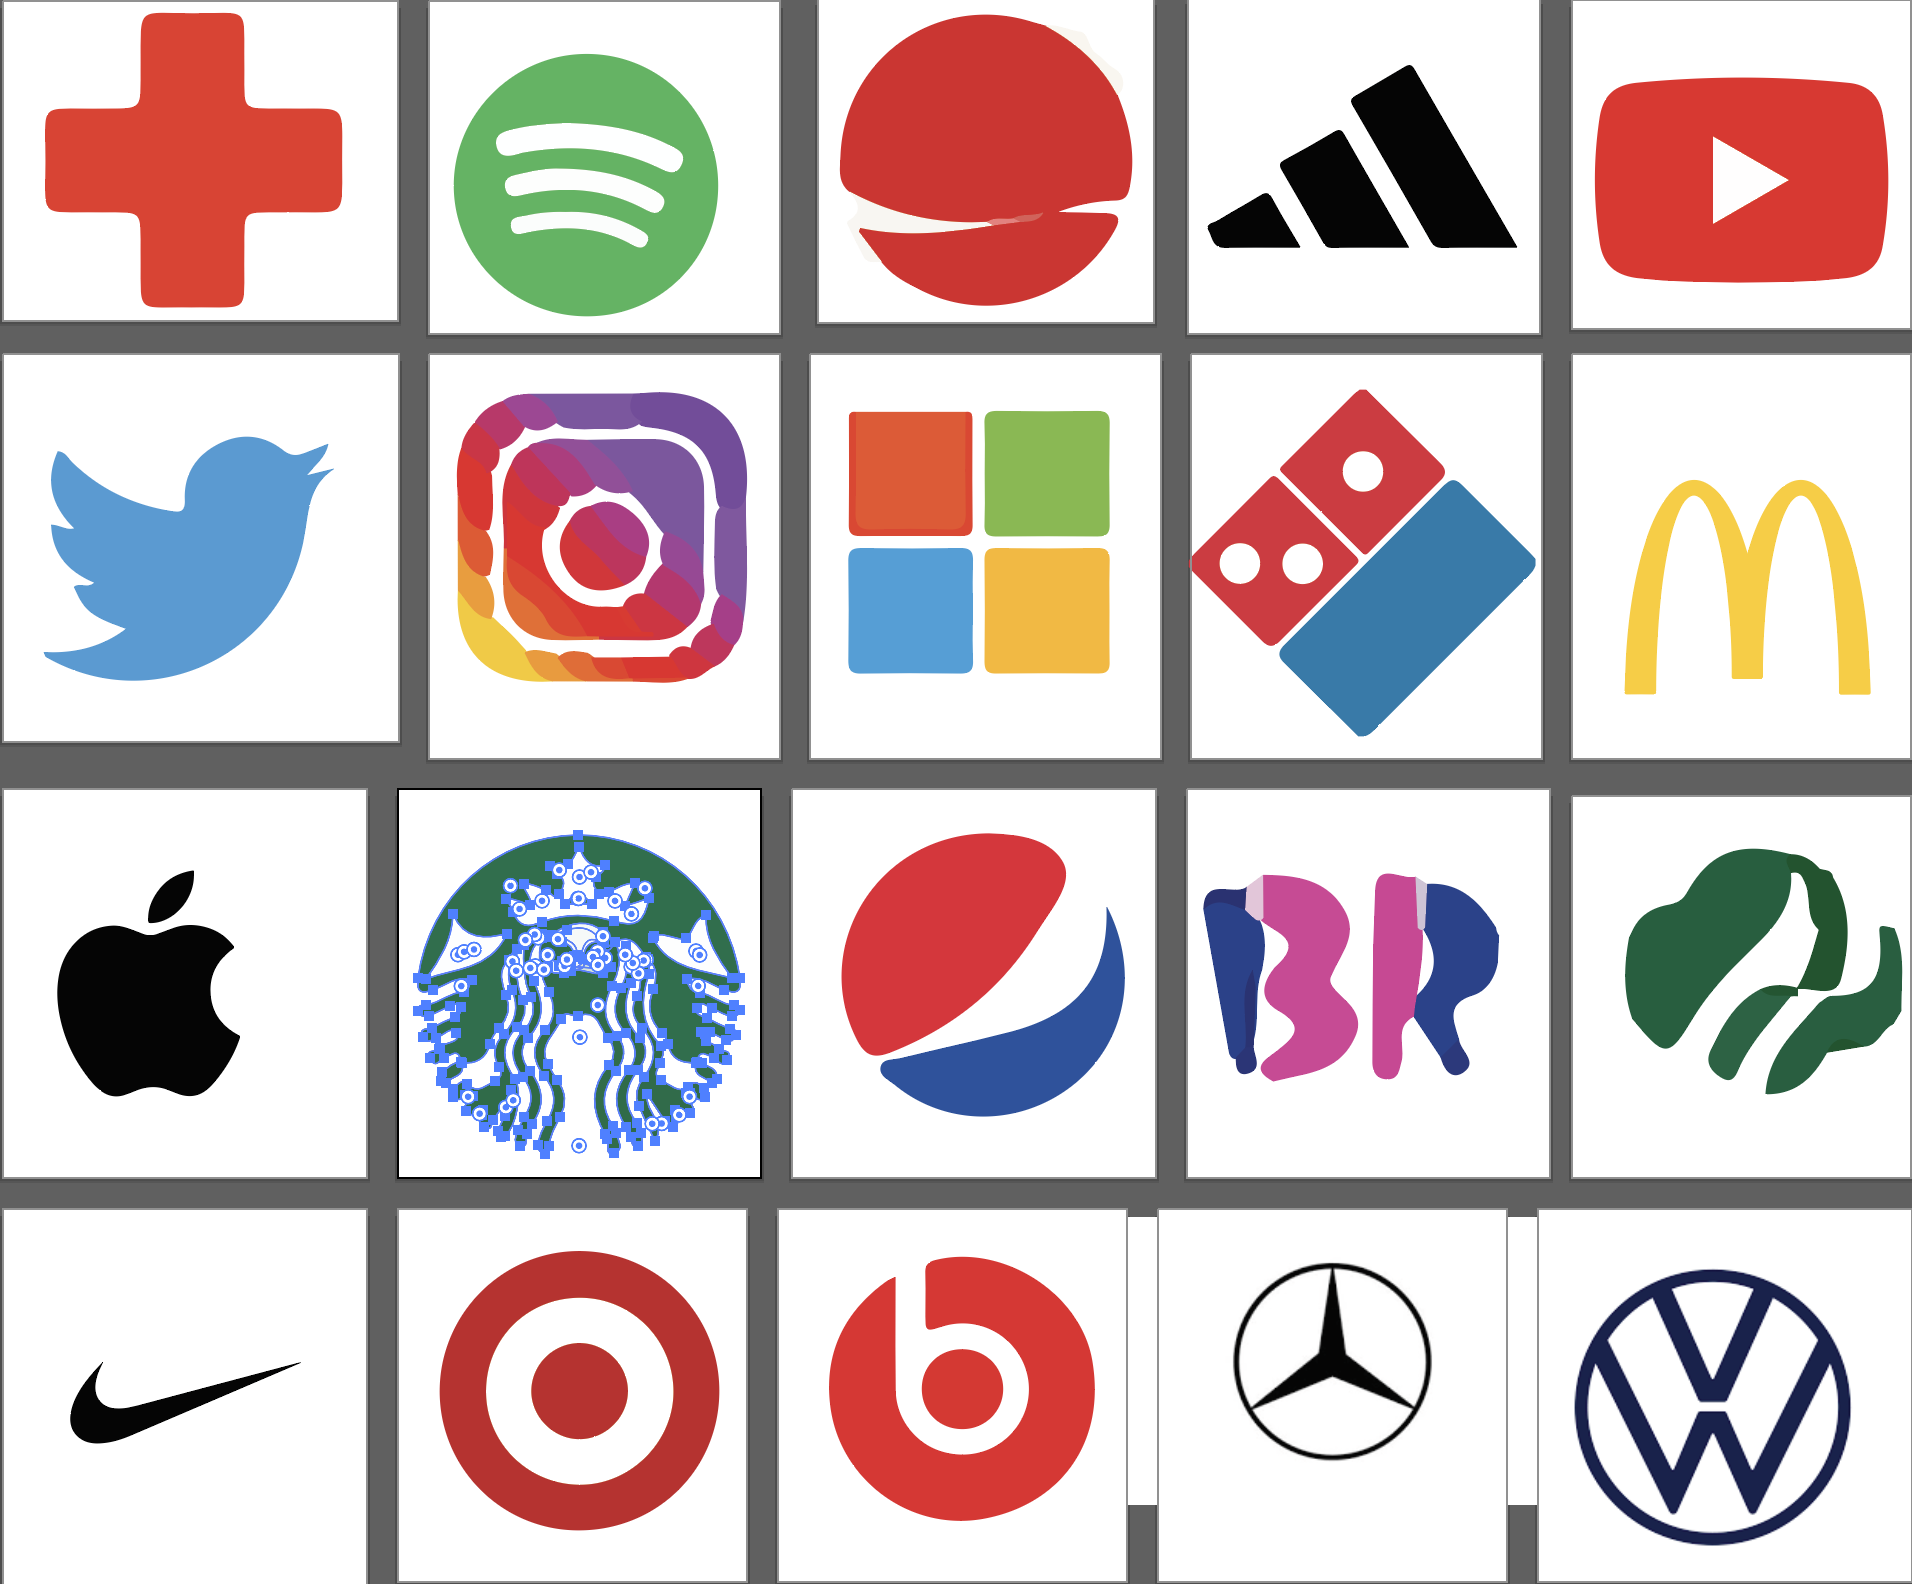 logos quiz with names